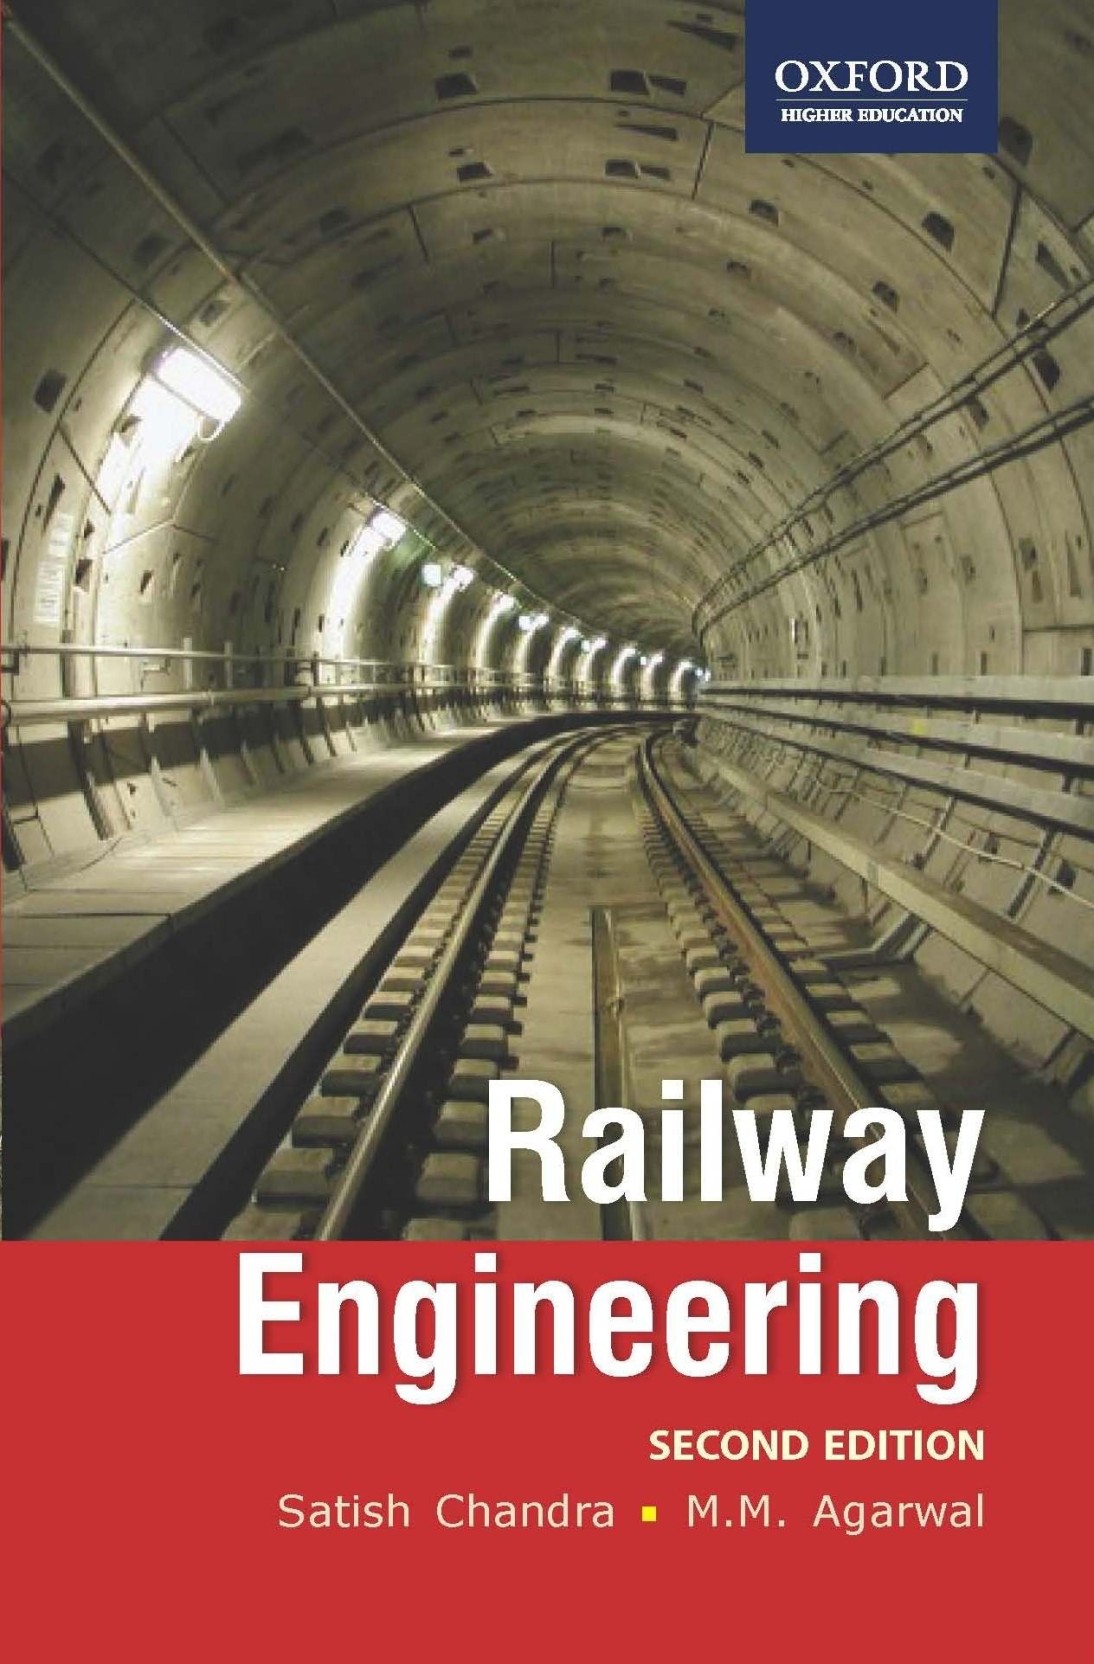 phd in railway engineering india